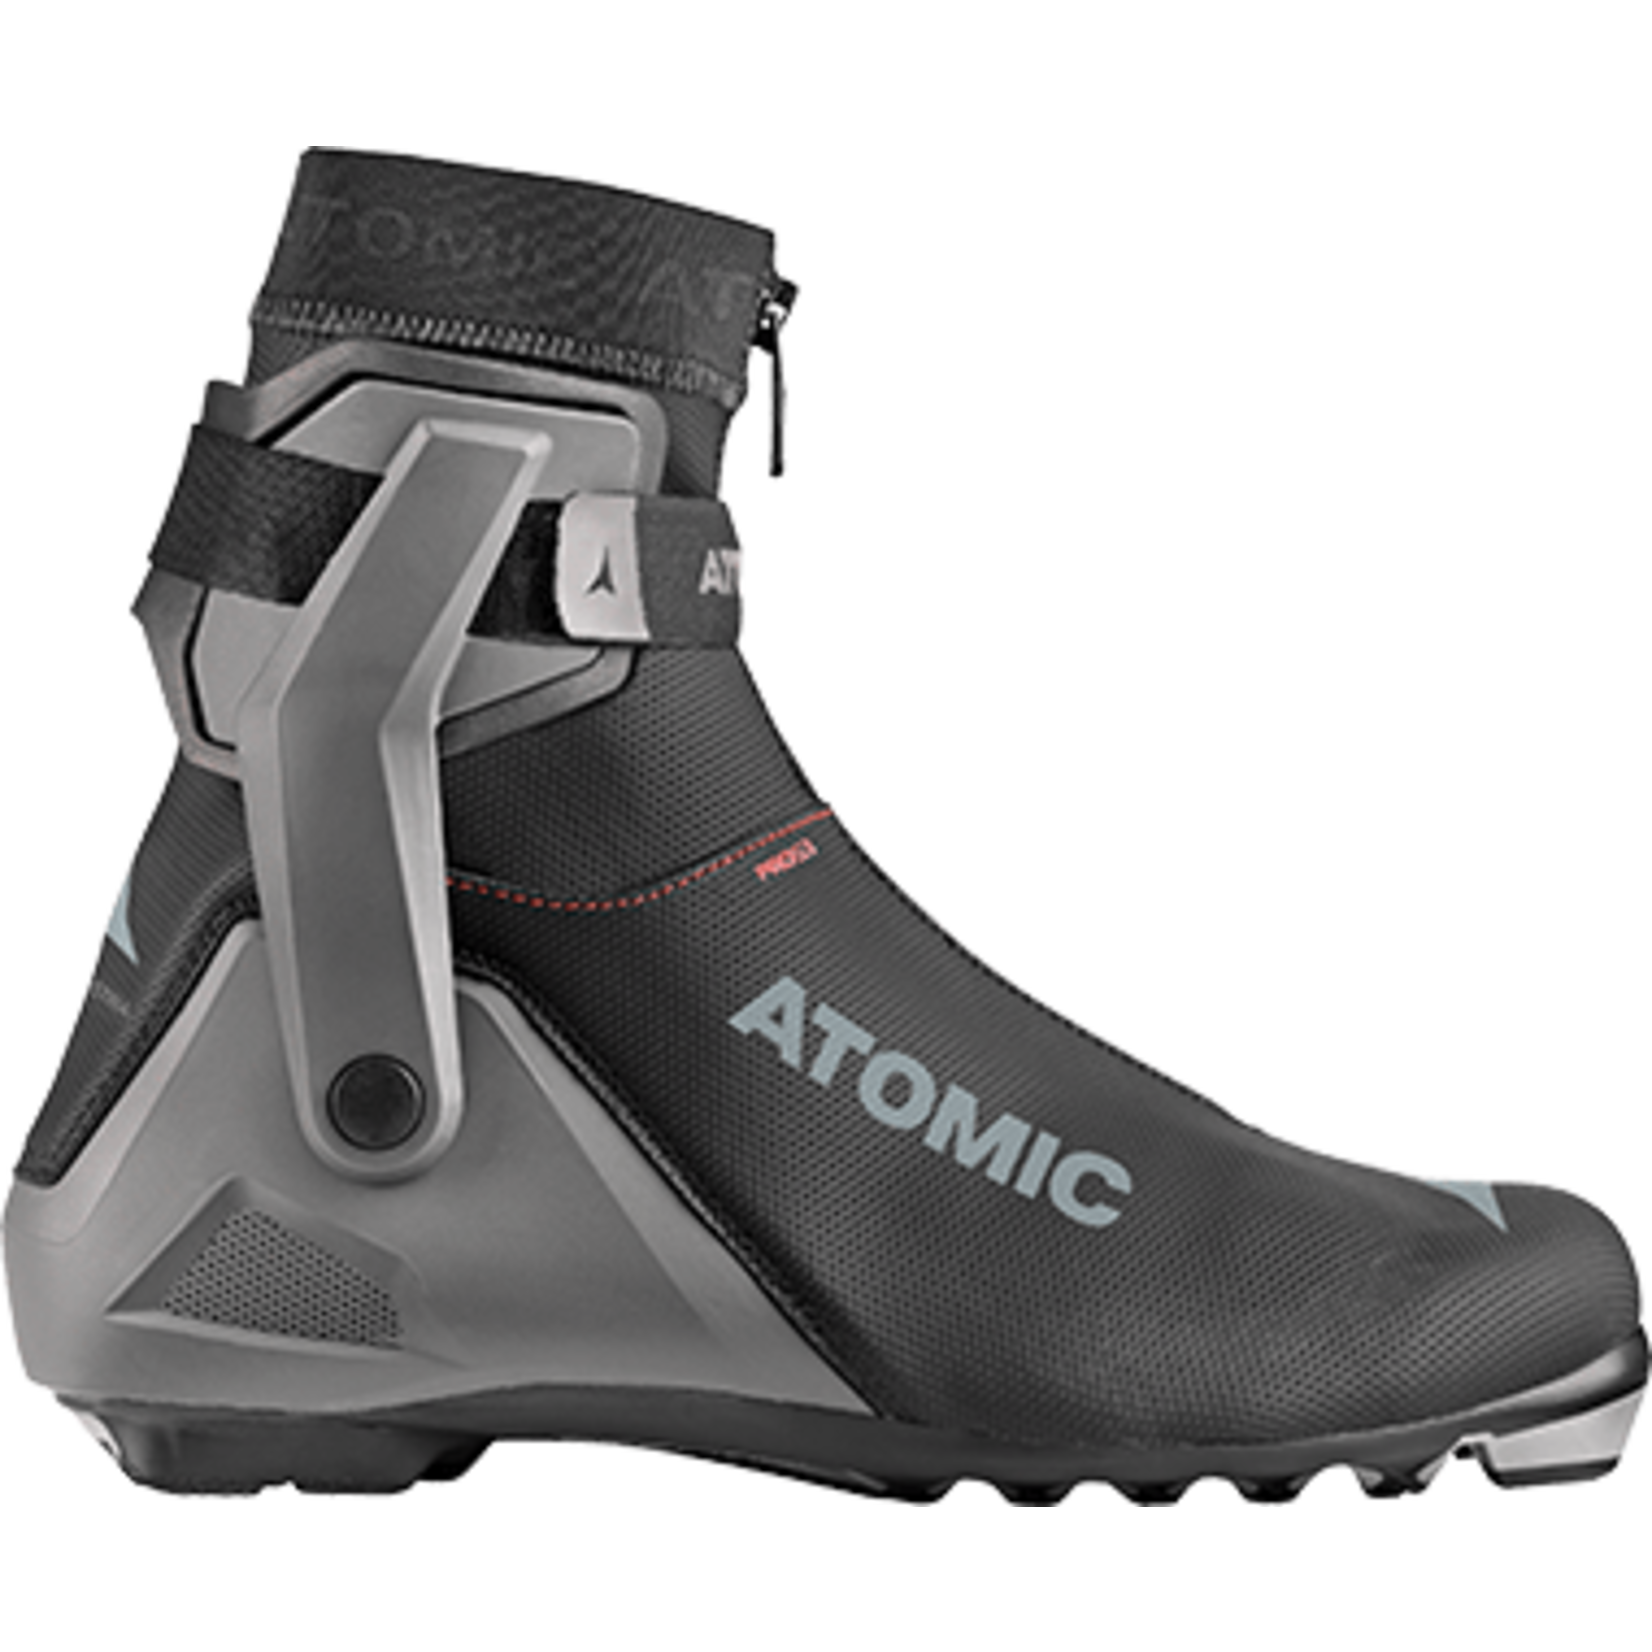 Atomic Bottes de ski de fond skating Pro S3